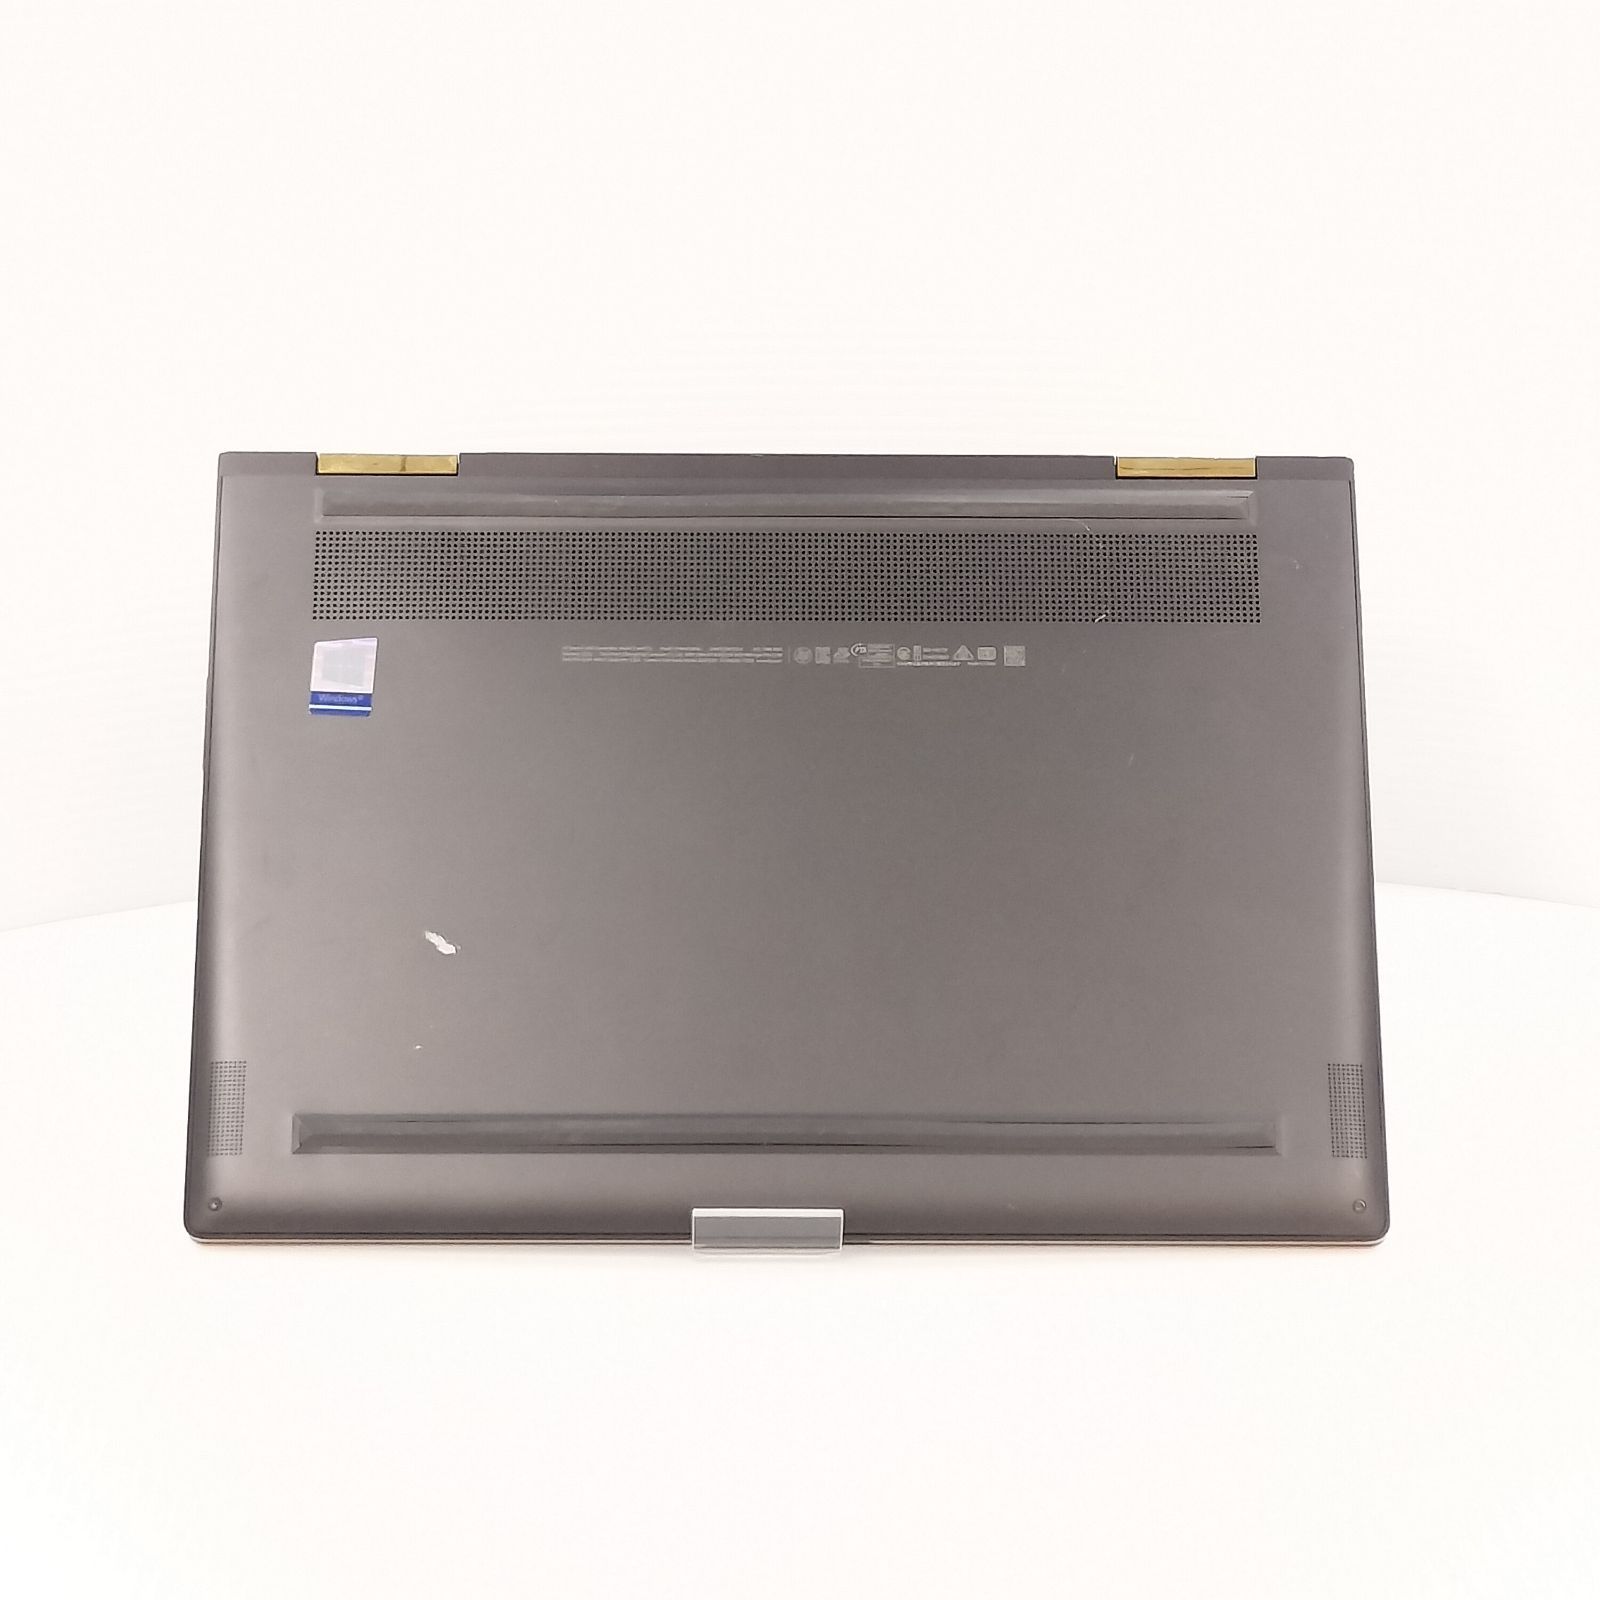 ☆高性能☆ HP Spectre x360 第8世代 i7-8550U SSD - Windowsノート本体